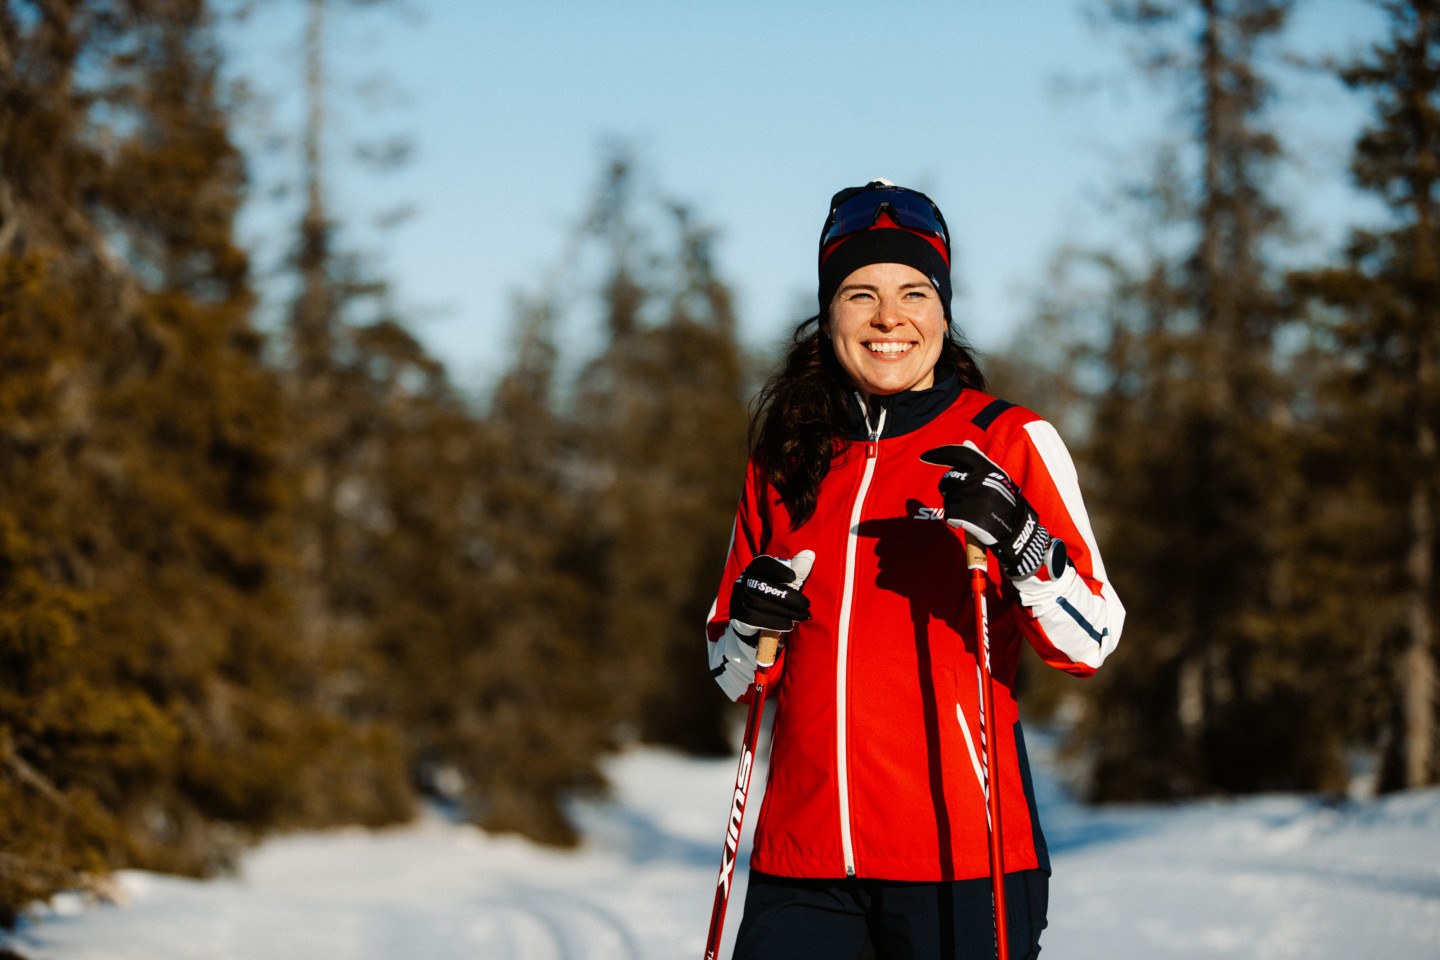 Finnish top athlete Krista Pärmäkoski